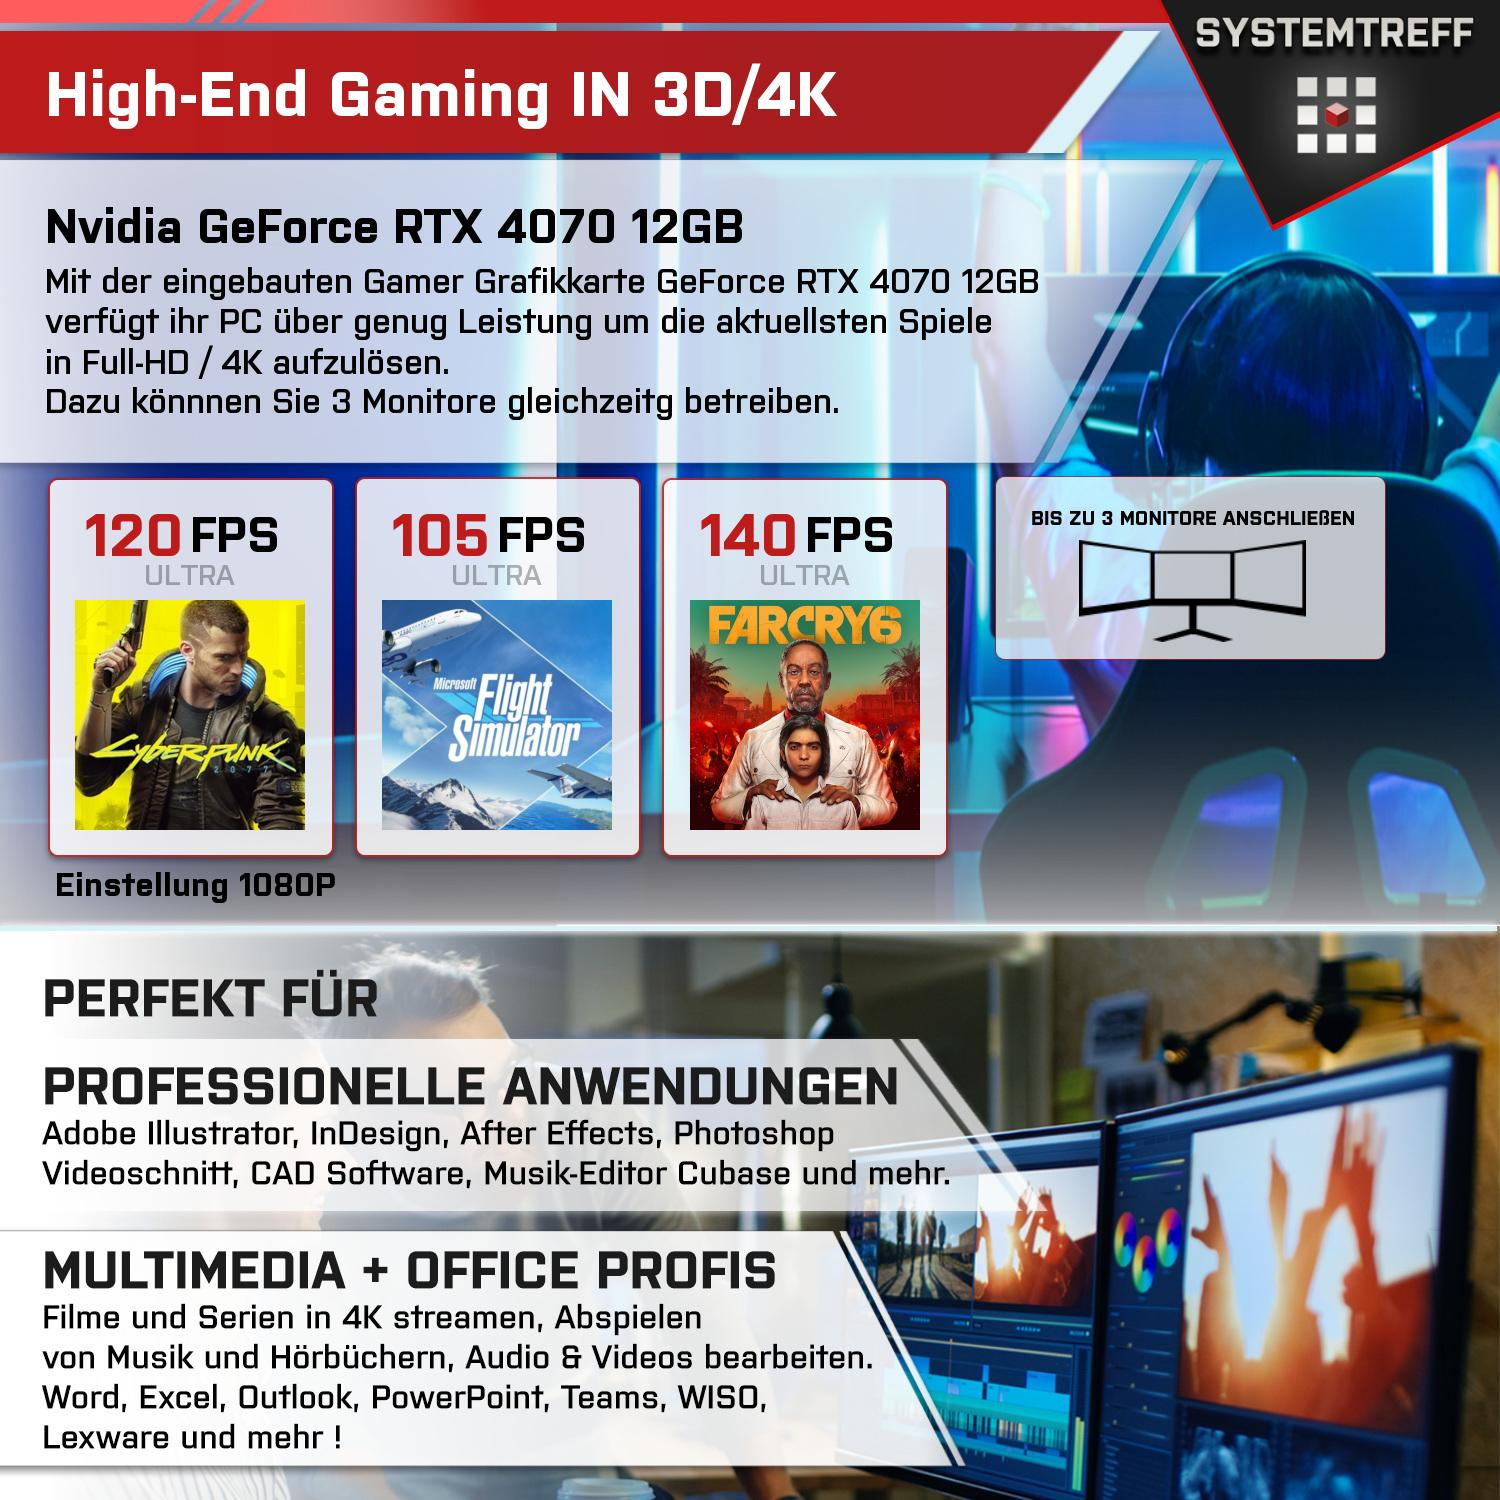 SYSTEMTREFF High-End Gaming mit 1000 Gaming 32 4070 GeForce Windows AMD AMD 9 PC GB Prozessor, RAM, GB 11 Ryzen™ mSSD, NVIDIA Pro, 9 RTX™ 7950X, Ryzen